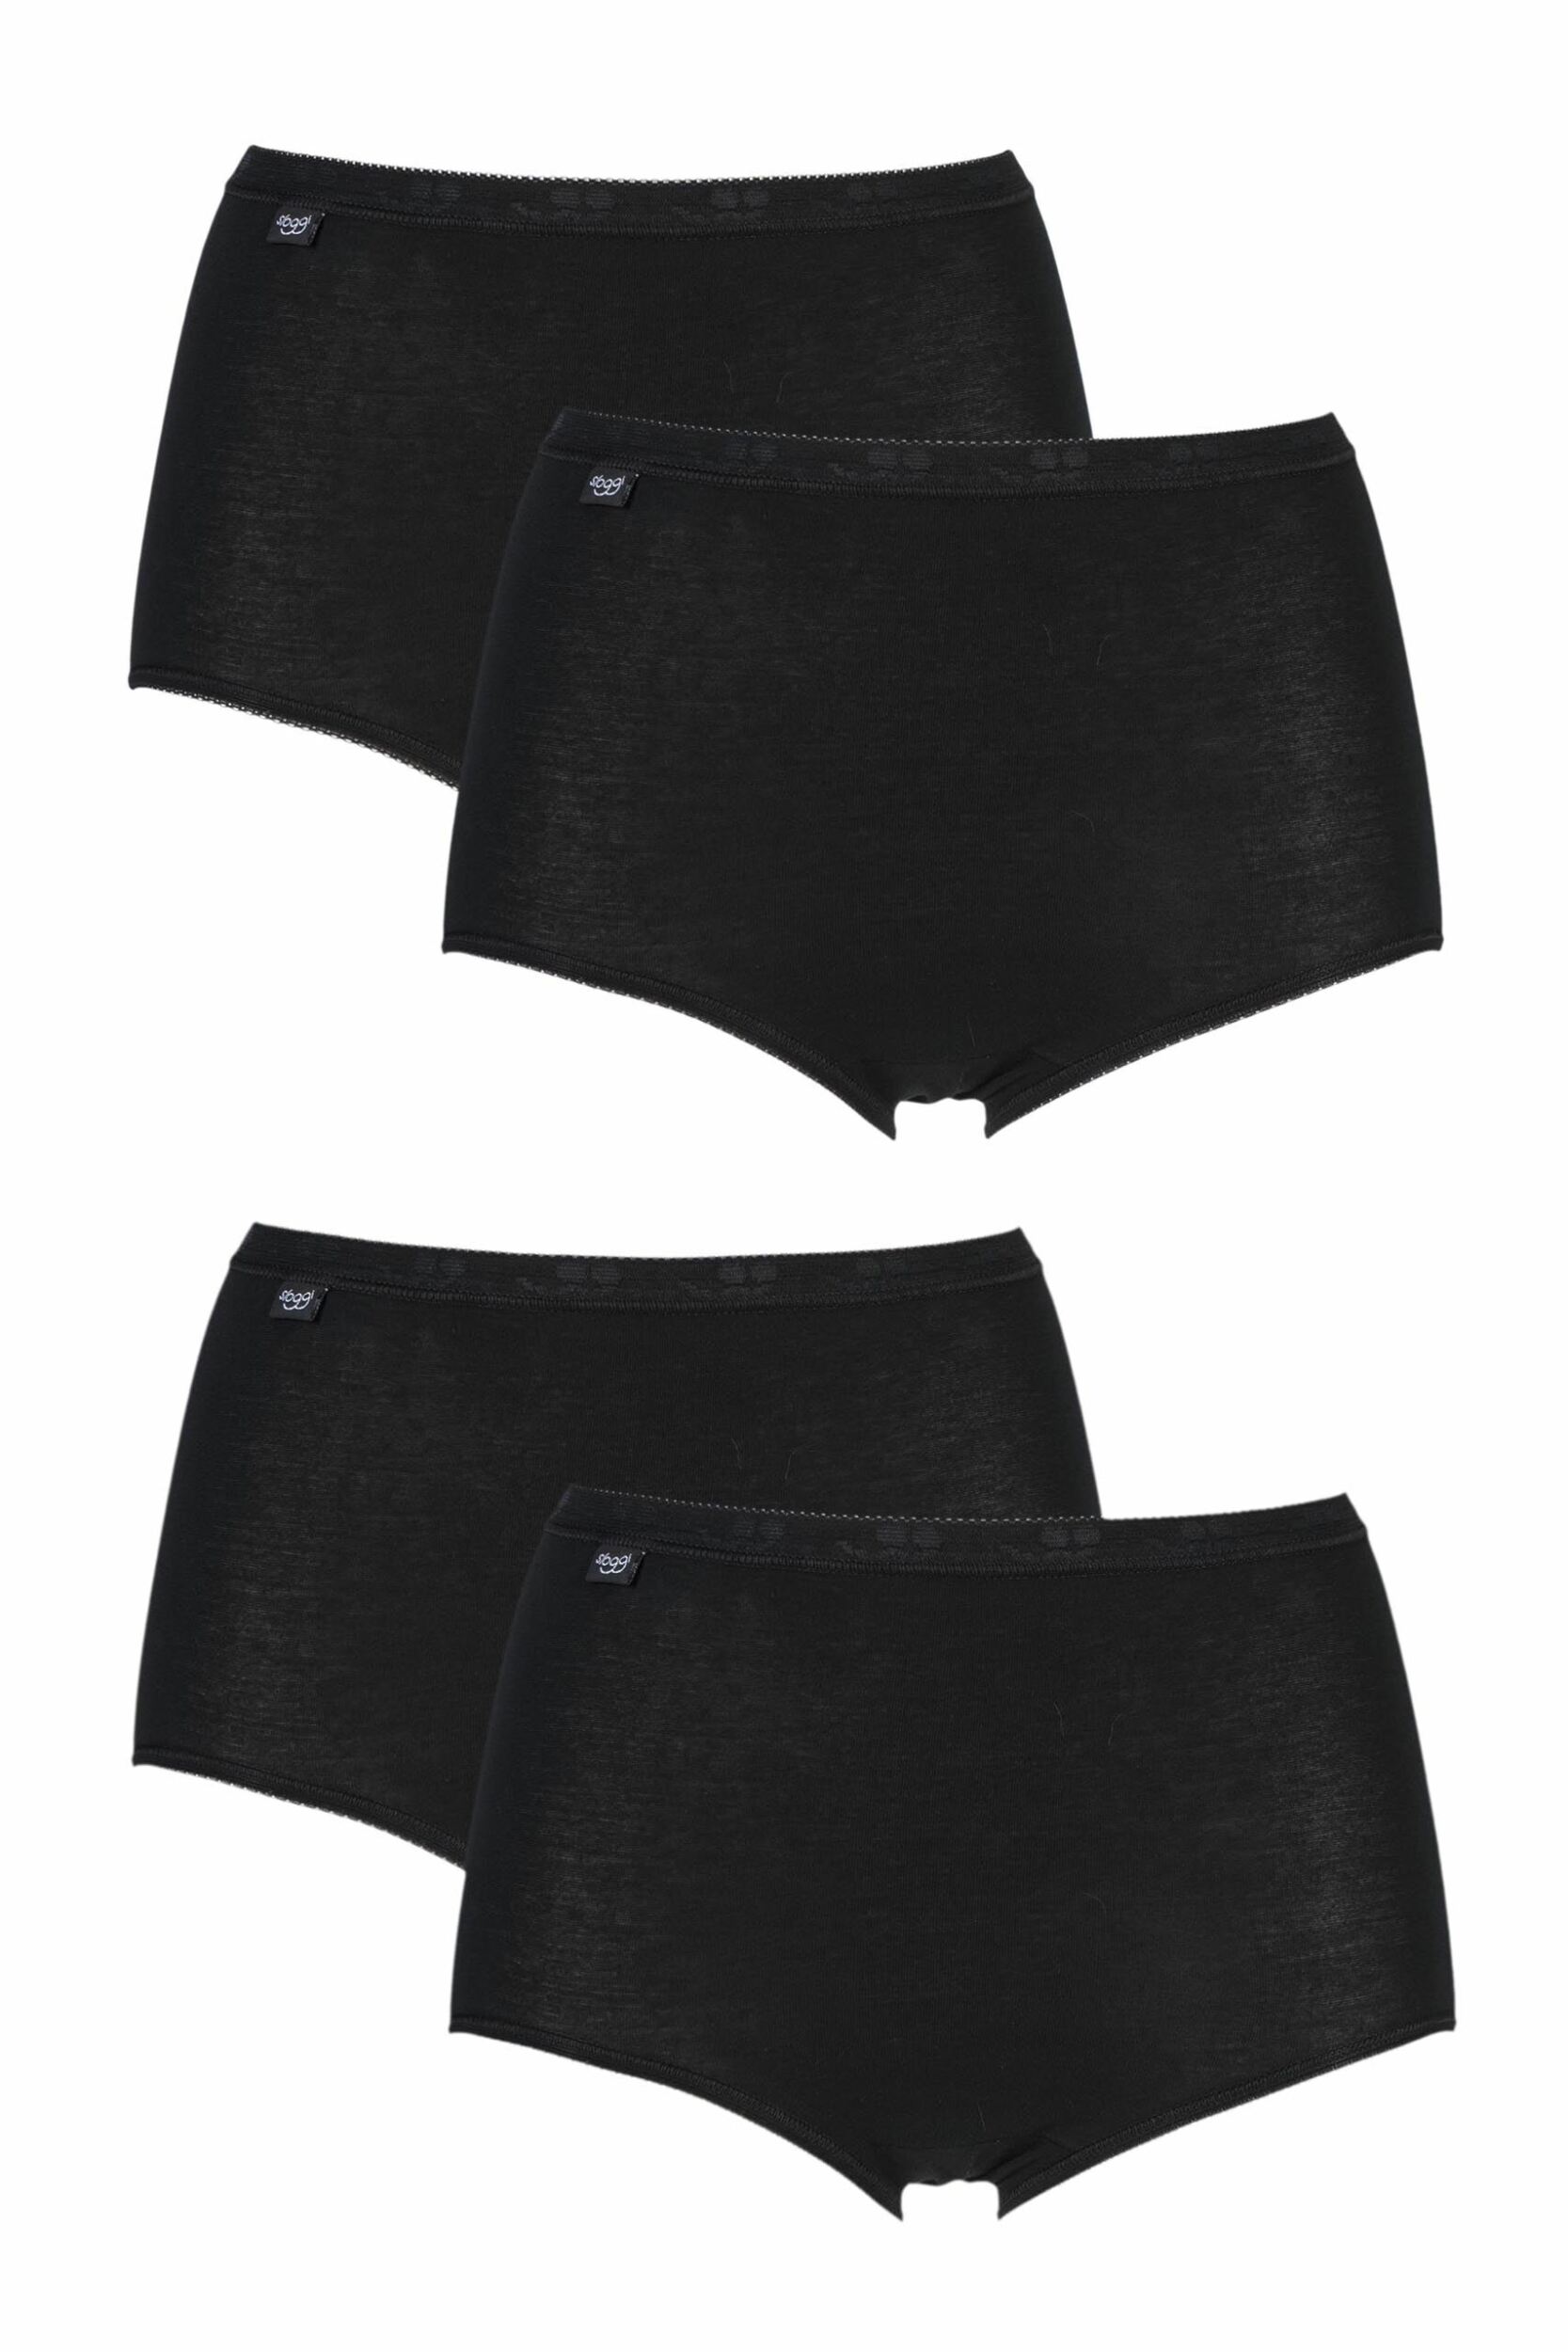 4 Pack Black Basic Maxi Briefs Ladies 12 Ladies - Sloggi  - Black - Size: UK 12